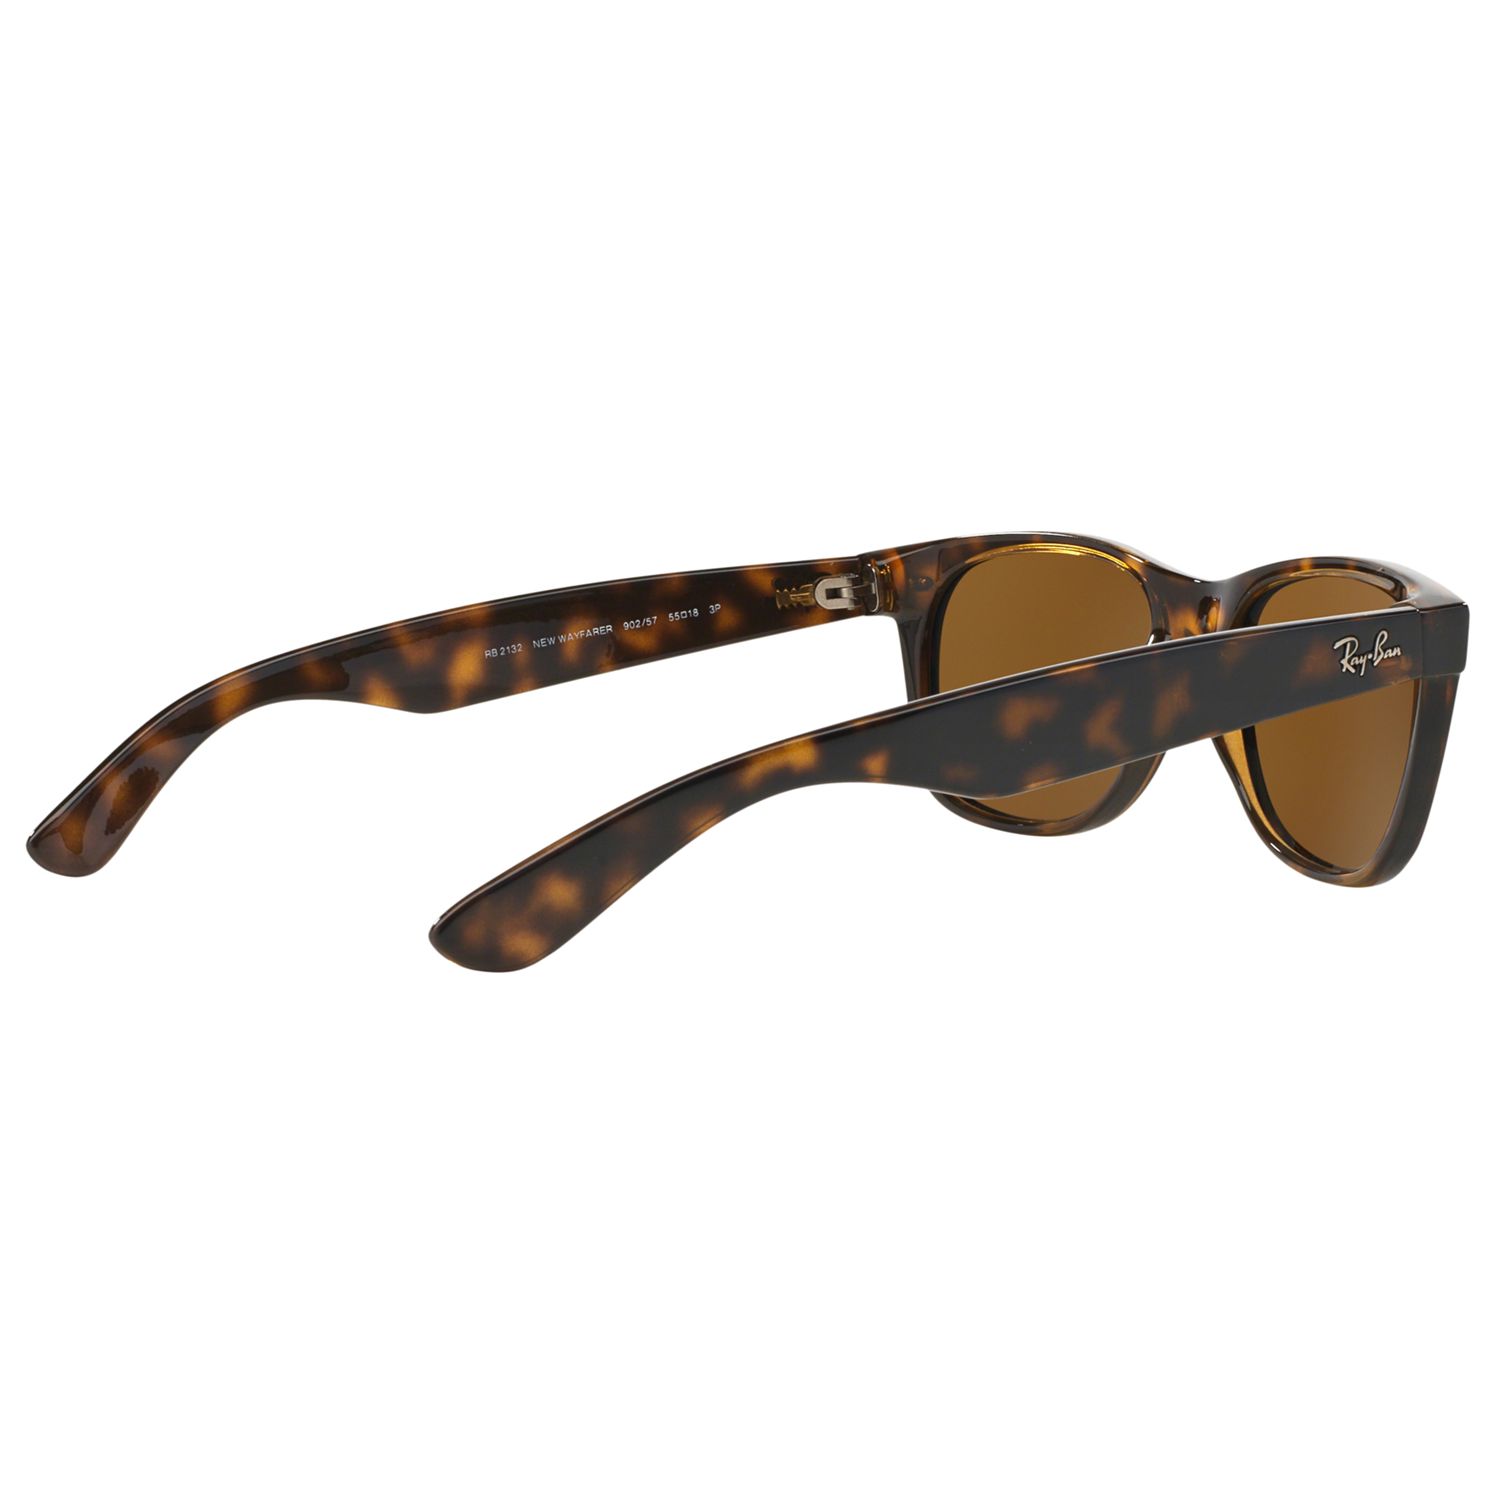 Ray Ban Rb2132 Men S New Wayfarer Polarised Sunglasses Tortoise Brown At John Lewis Partners